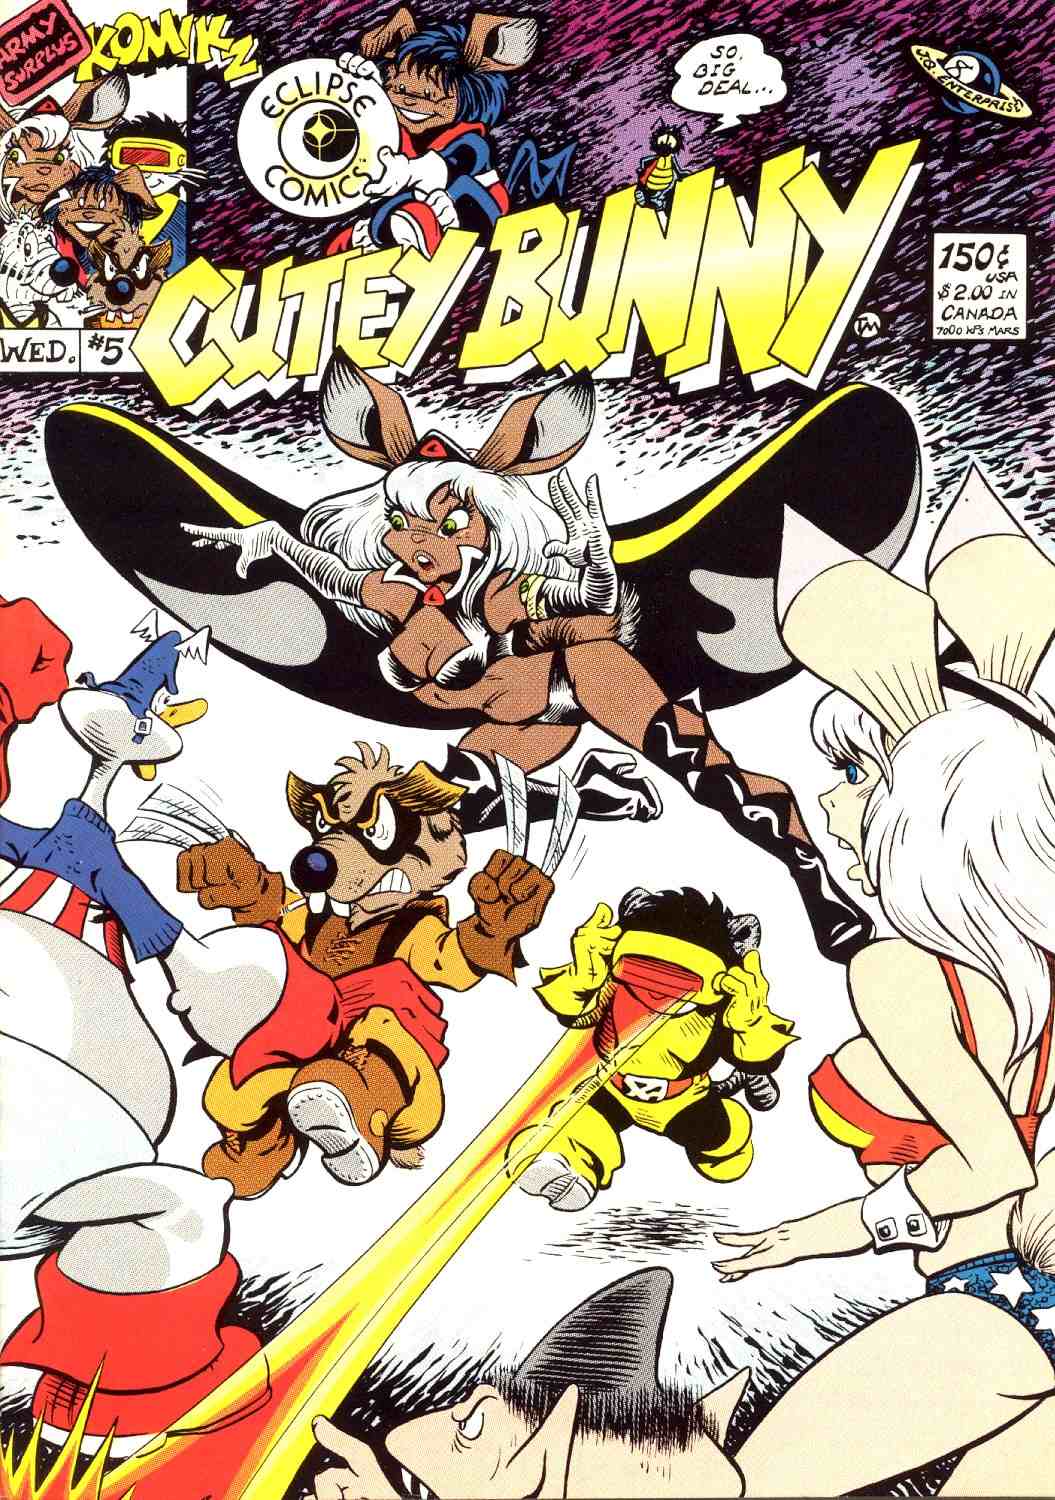 Read online Army  Surplus Komikz Featuring: Cutey Bunny comic -  Issue #5 - 1